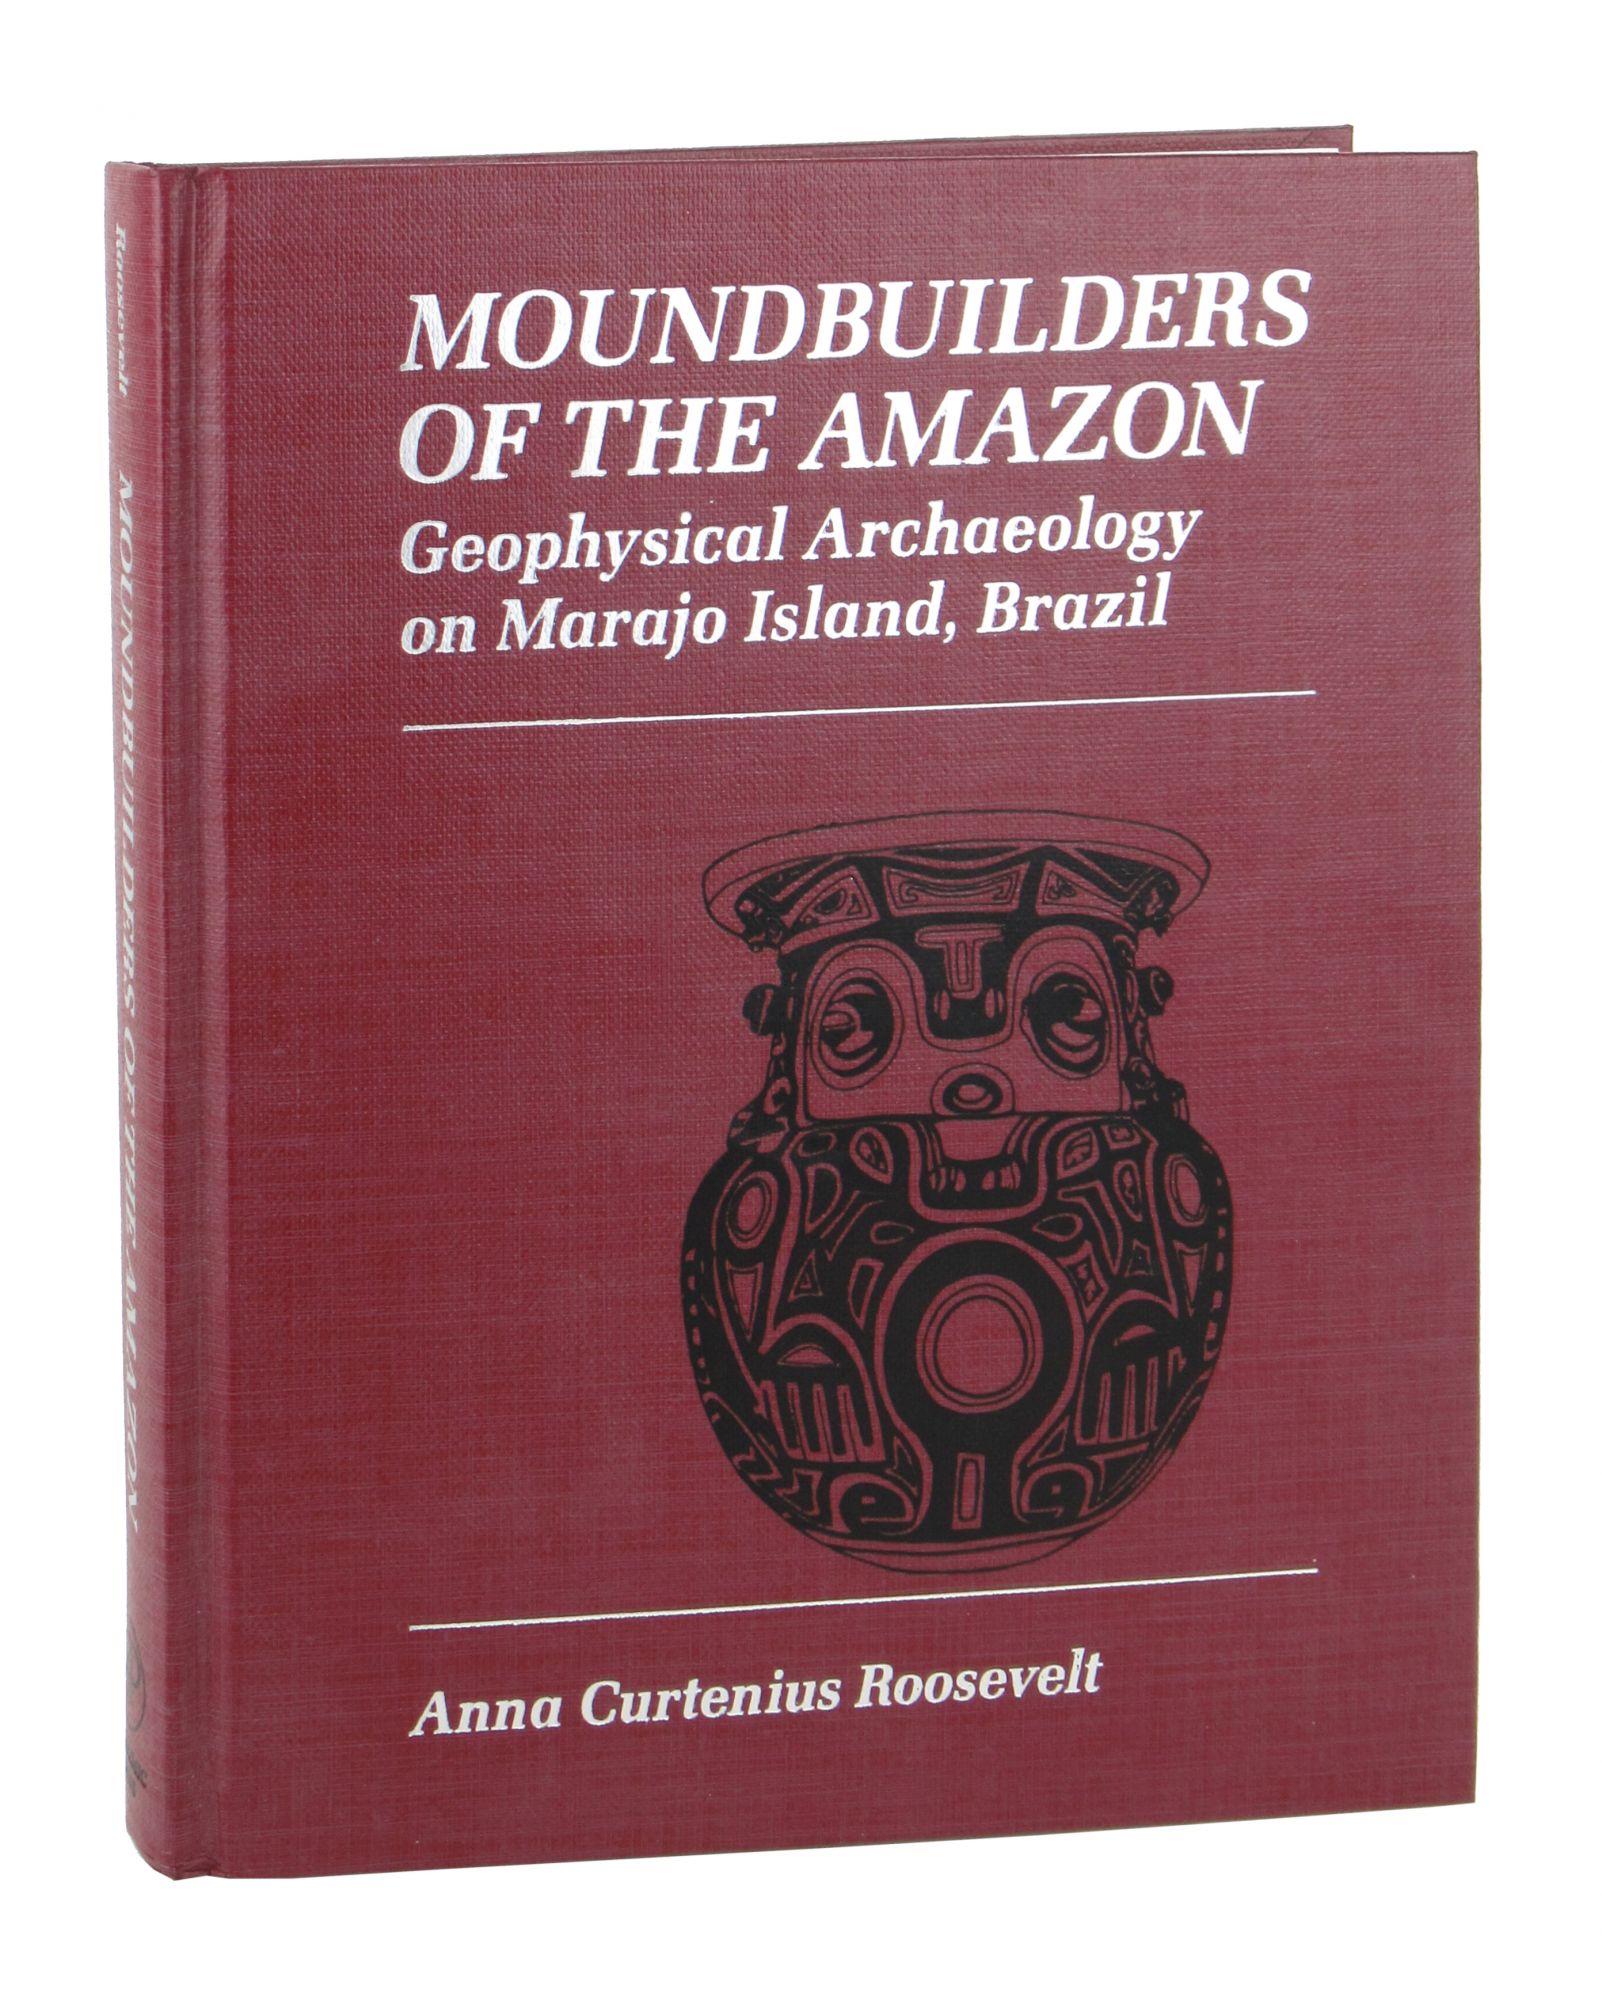 Moundbuilders of the Amazon: Geophysical Archaeology on Marajo Island, Brazil - Anna Curtenius Roosevelt